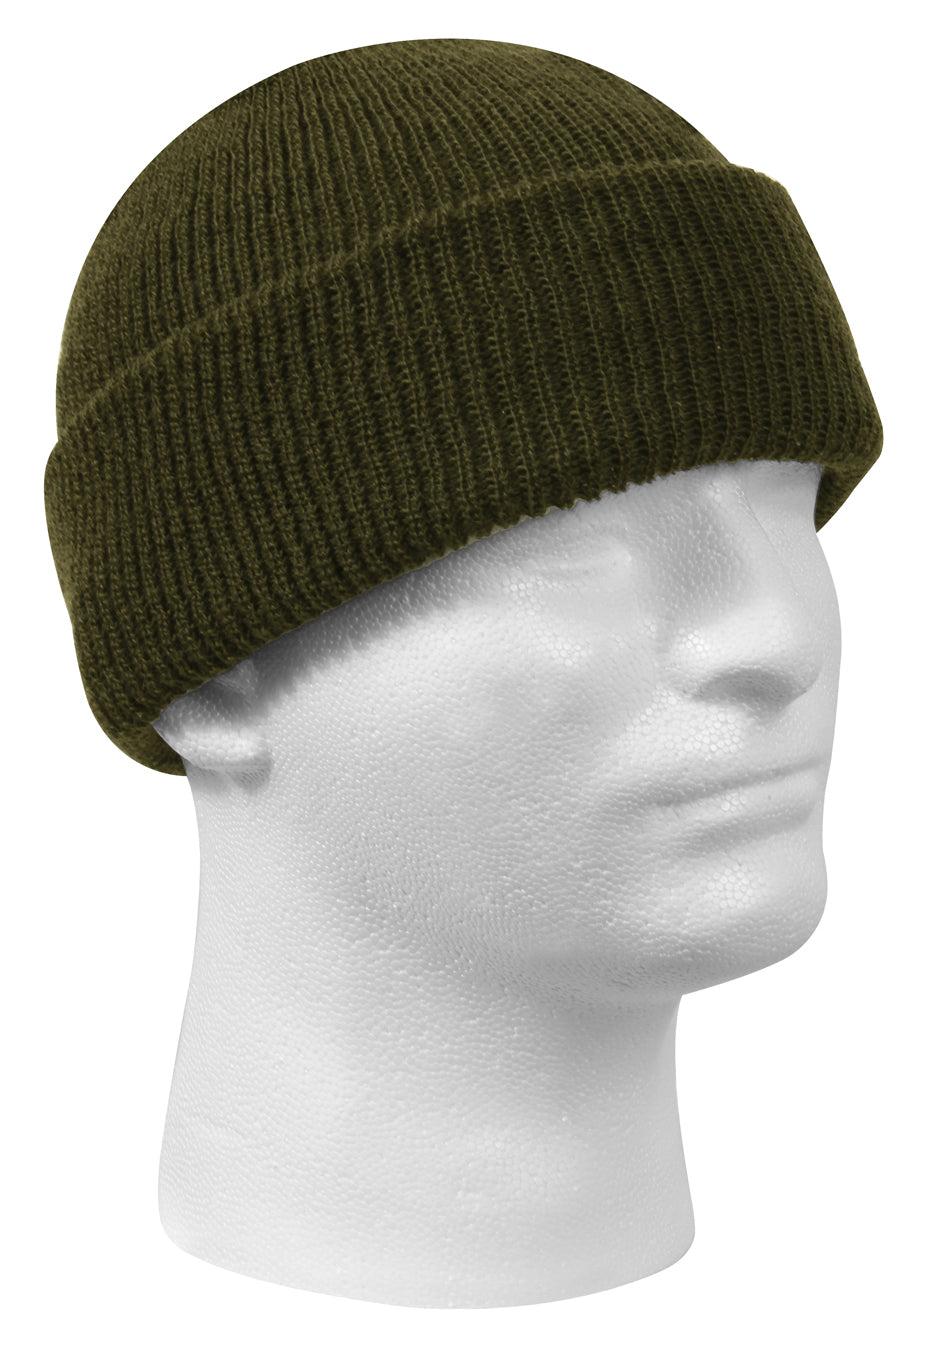 100% Wool Watch Cap Warm GI Cold Winter Weather Snow Ski Hat USA Made